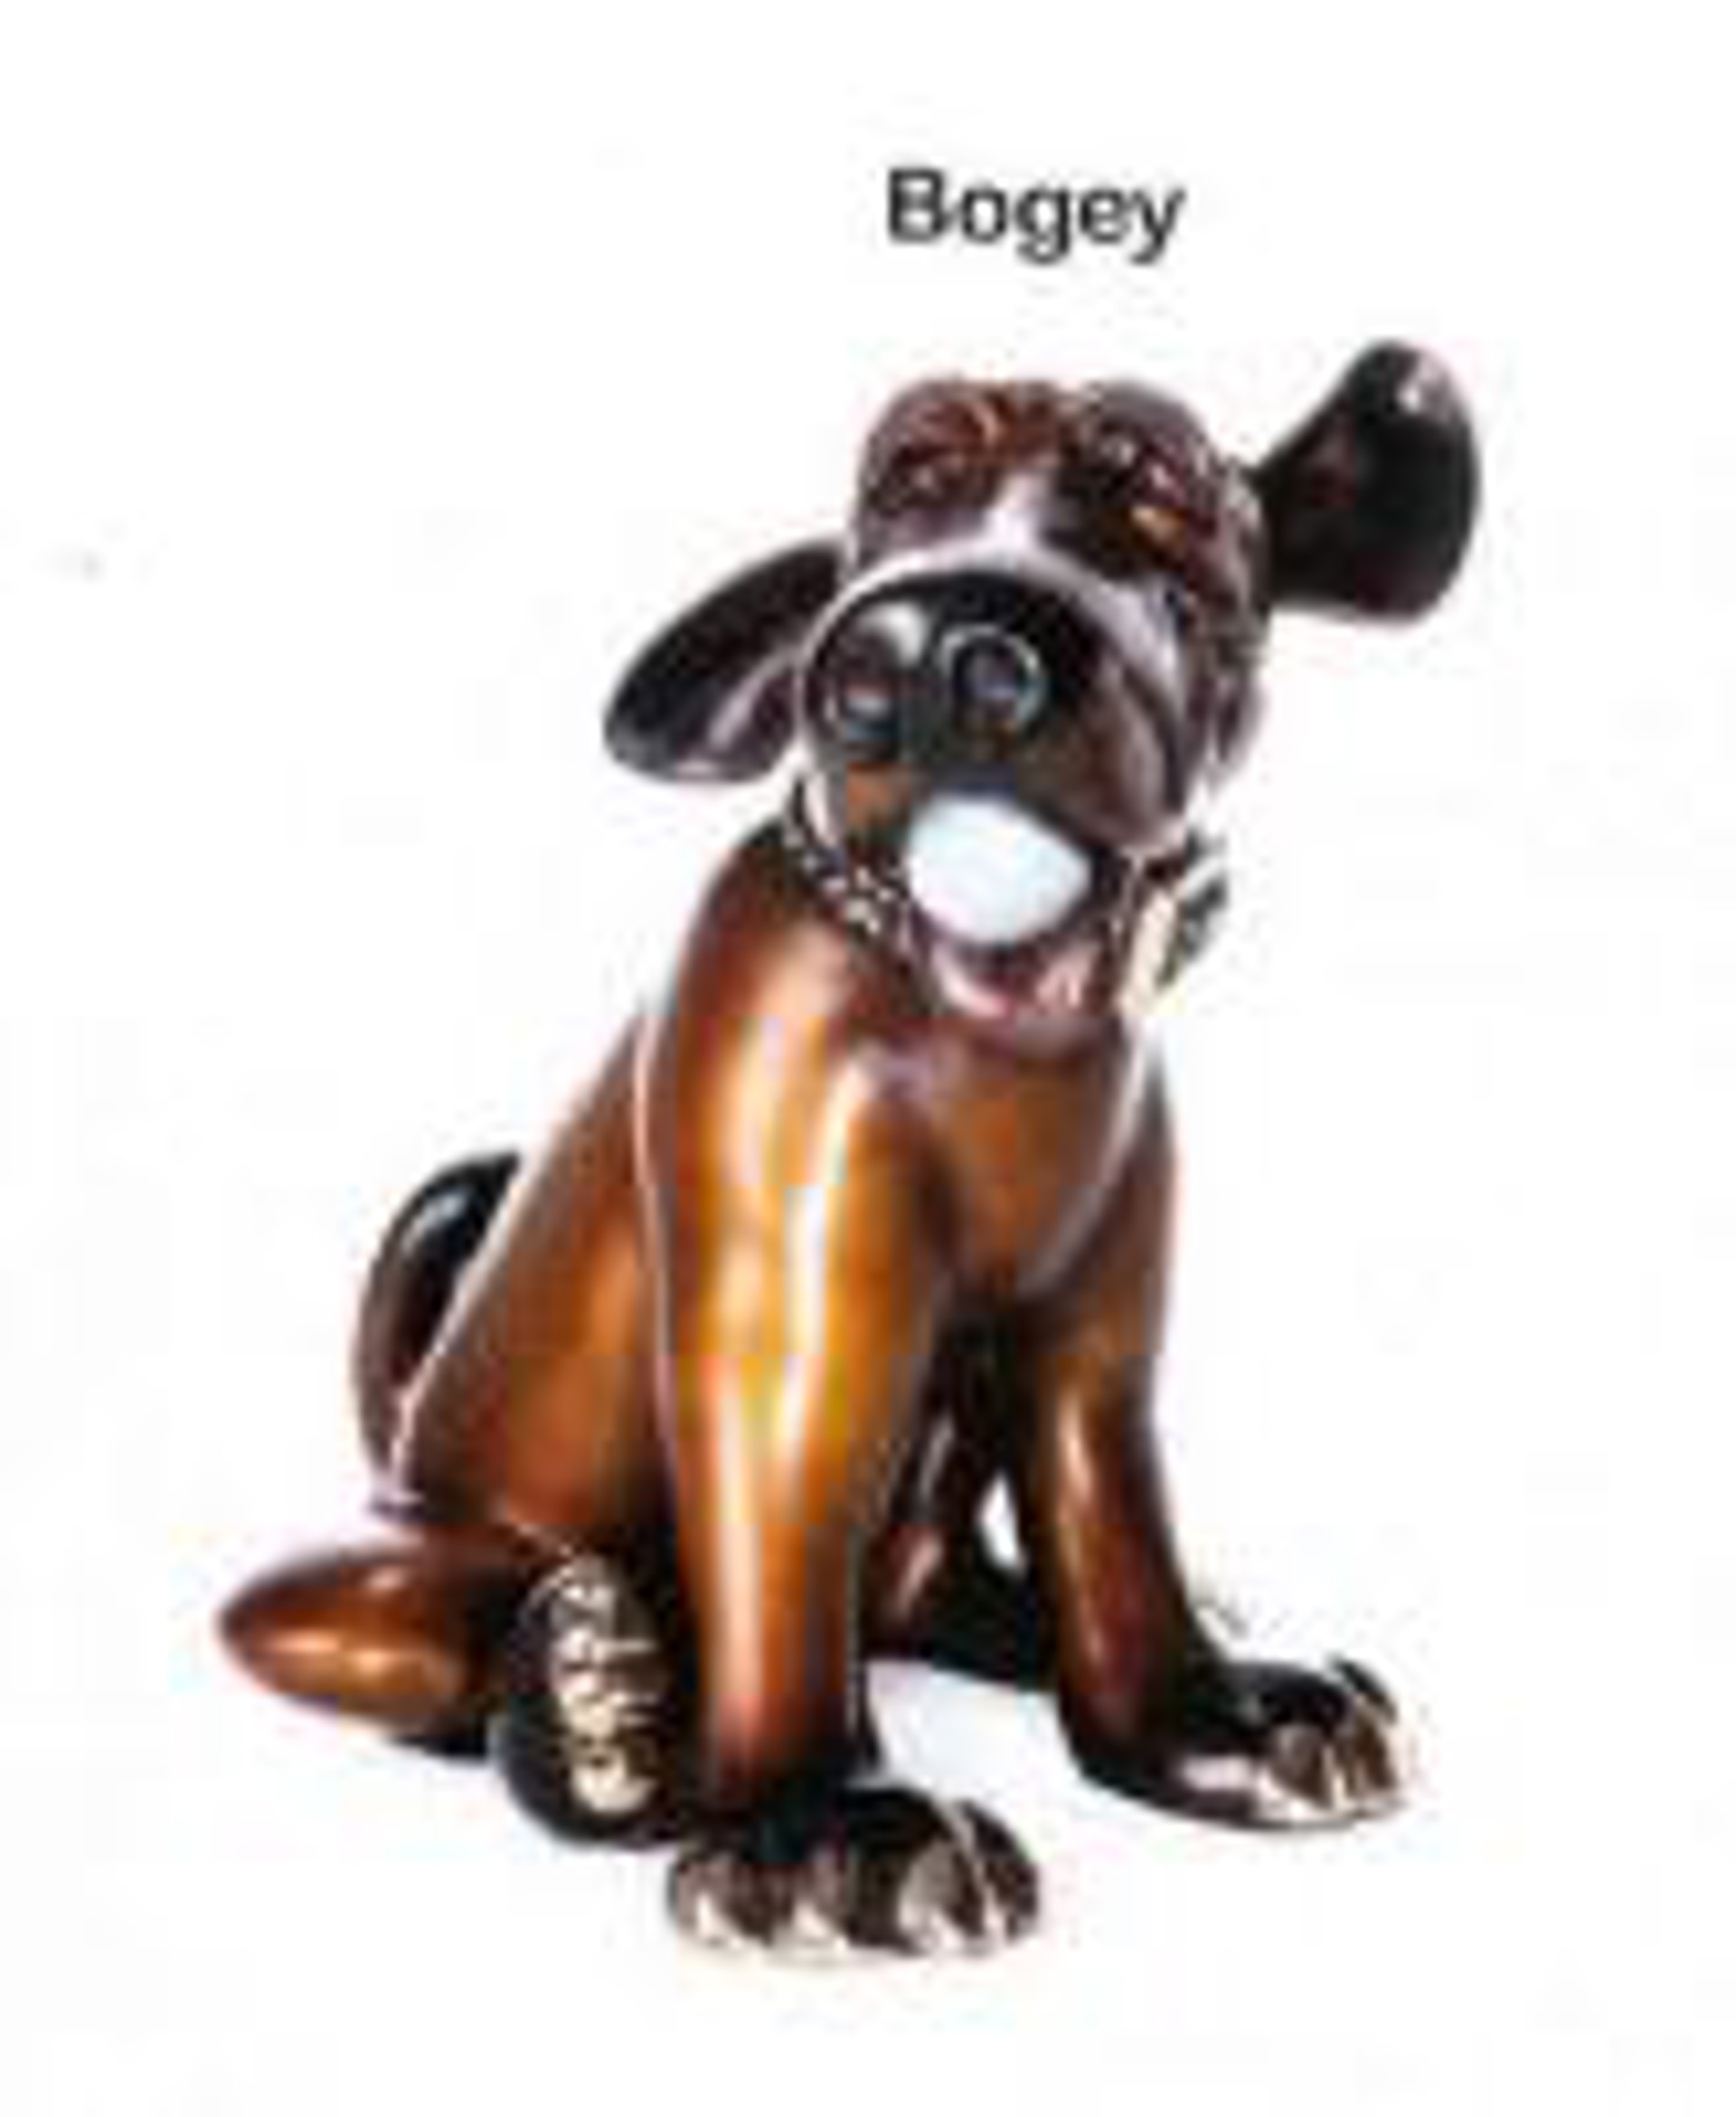 Bogey by Marty Goldstein